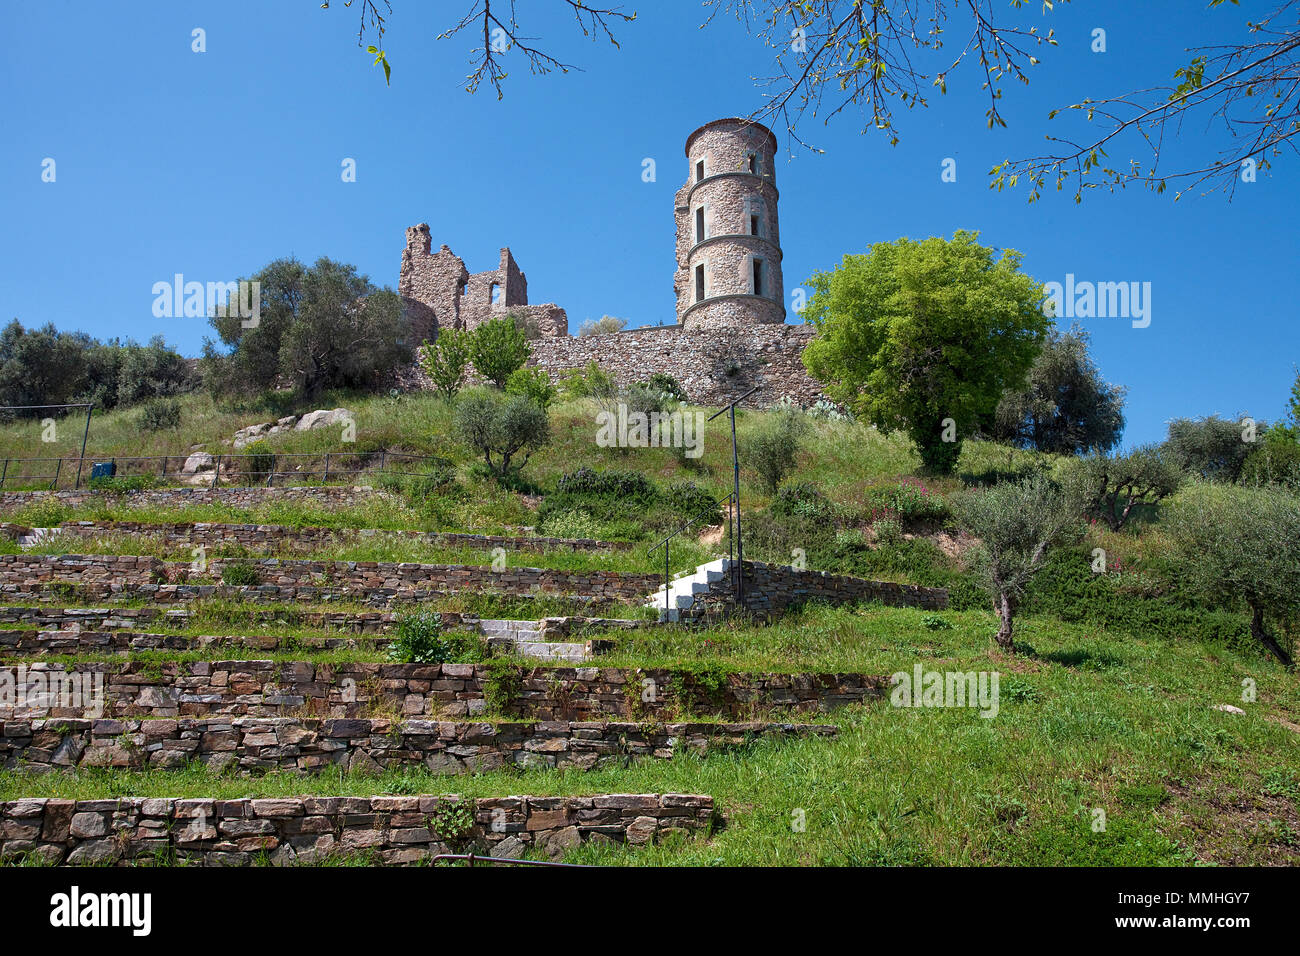 Medieval castle ruin, 11th century, Grimaud-Village, Cote d'Azur, South France, France, Europe Stock Photo